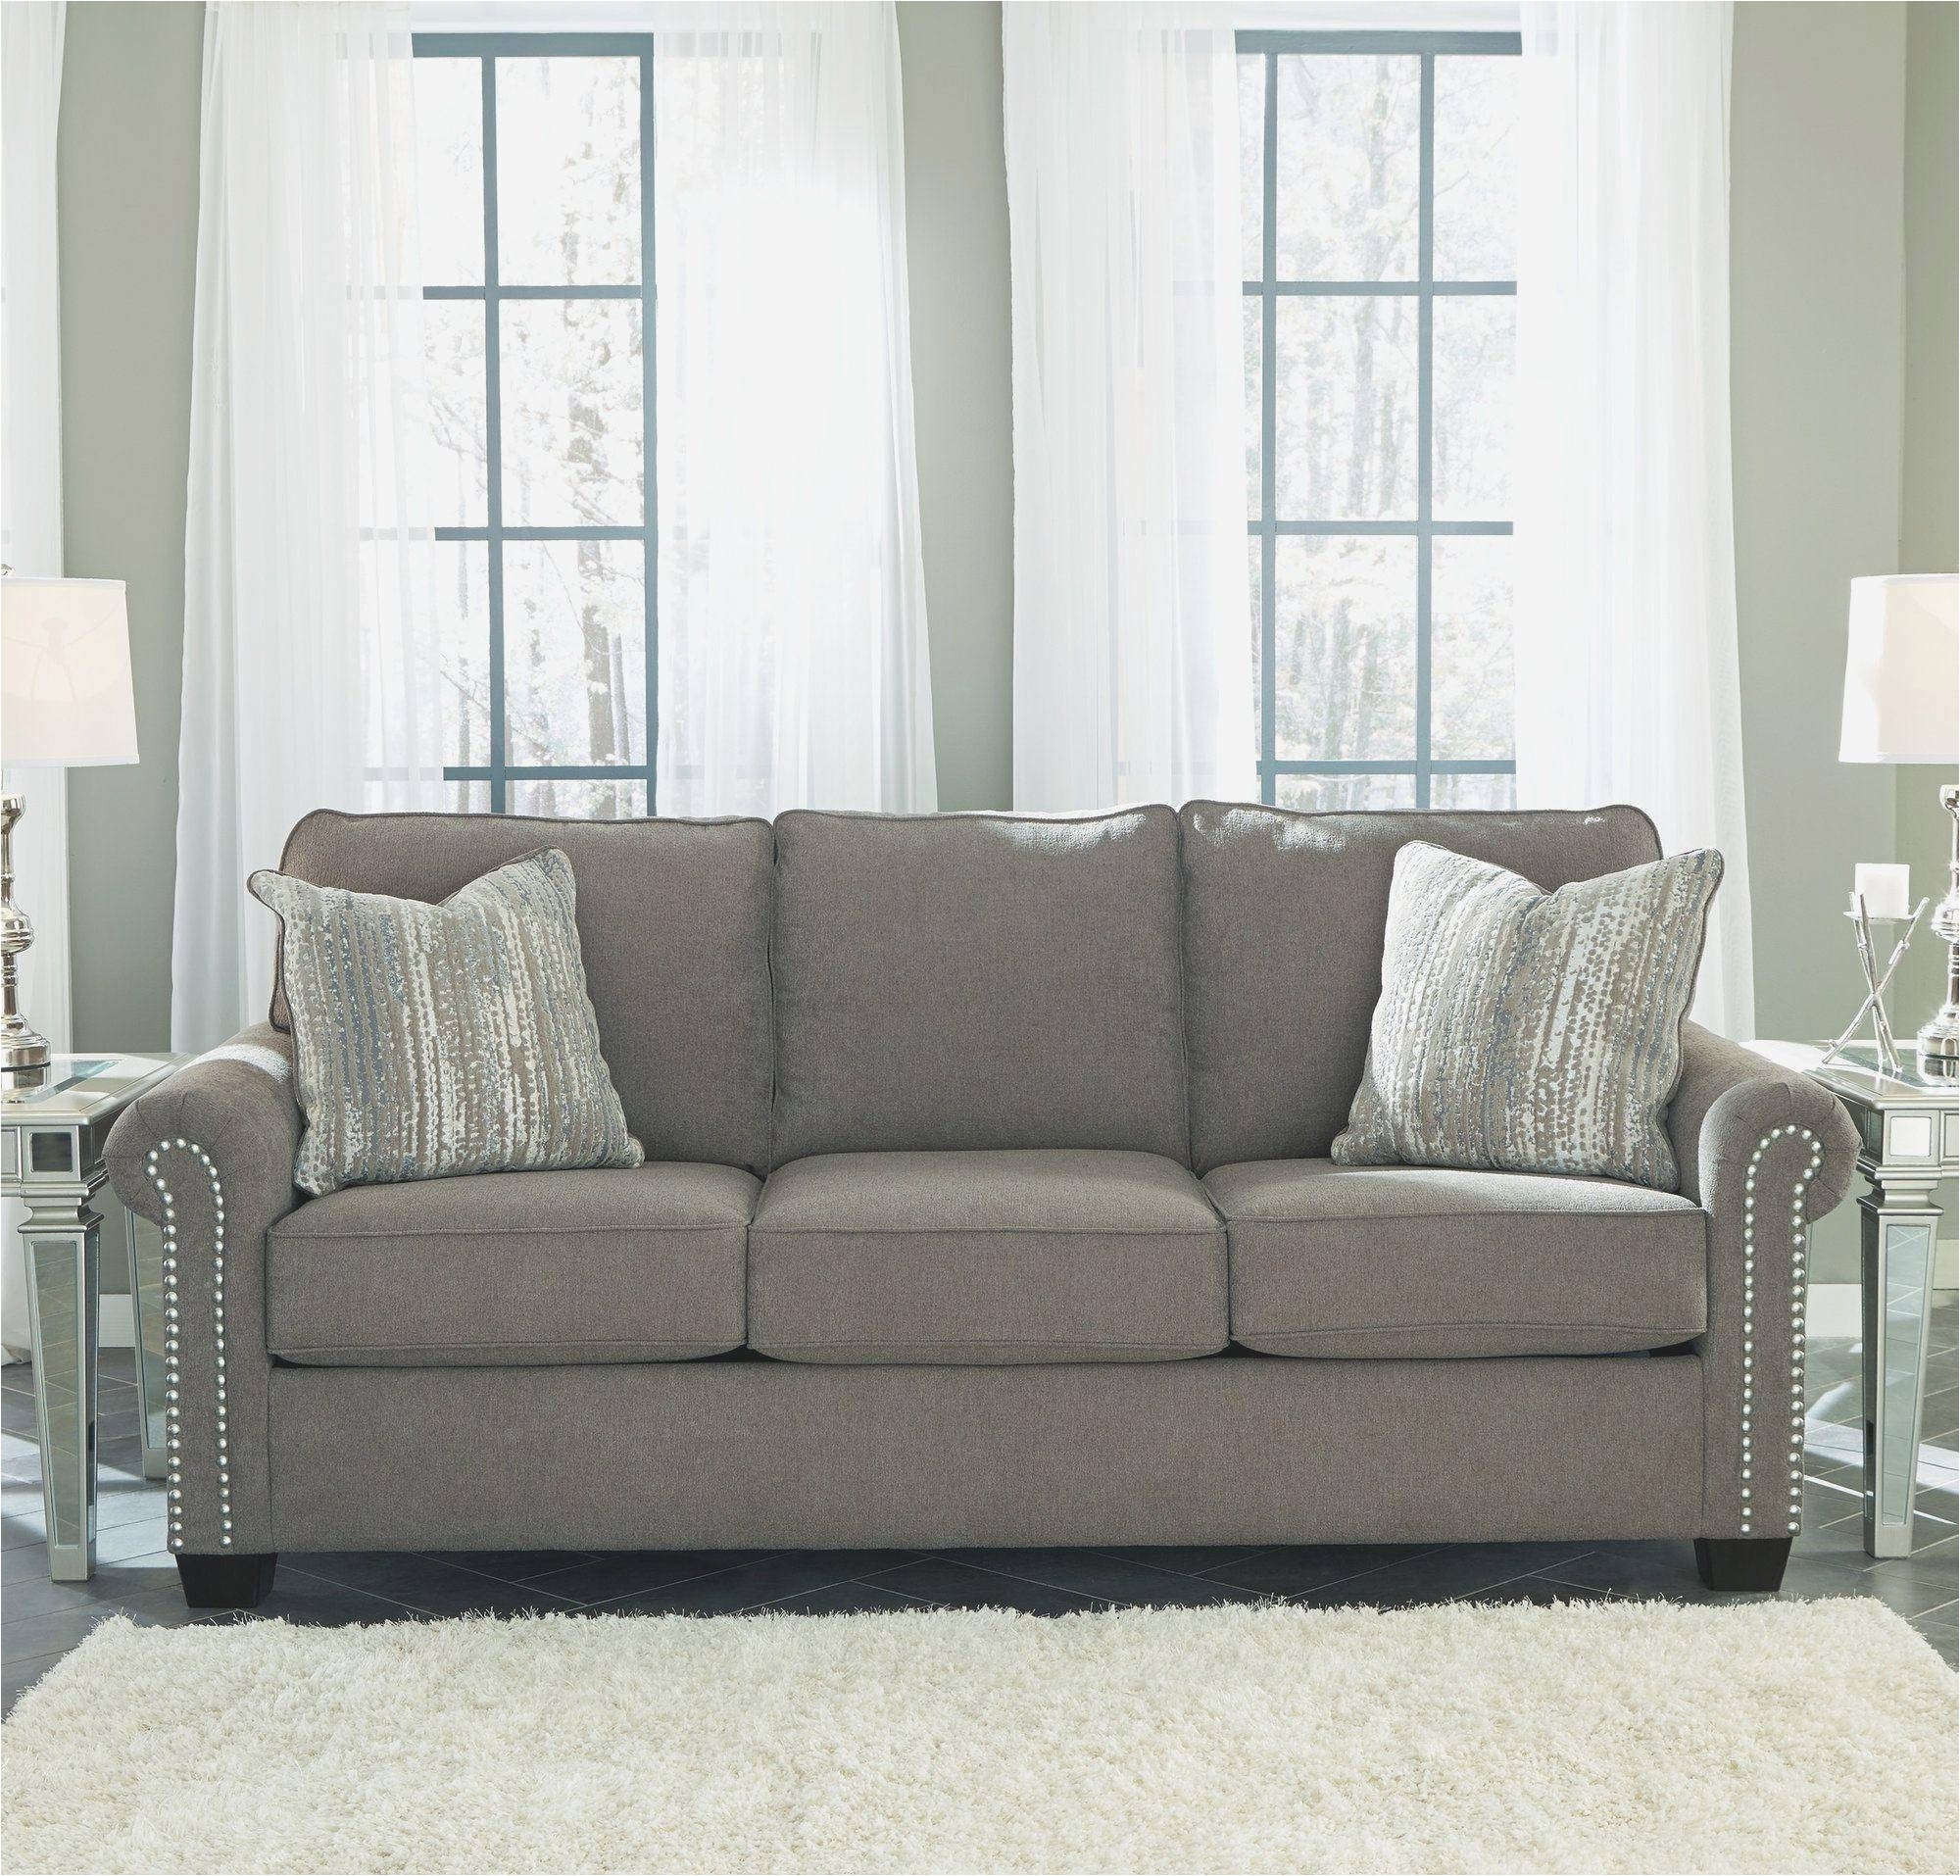 badcock living room sets luxury furniture badcock furniture badcock furniture 0d furnitures design